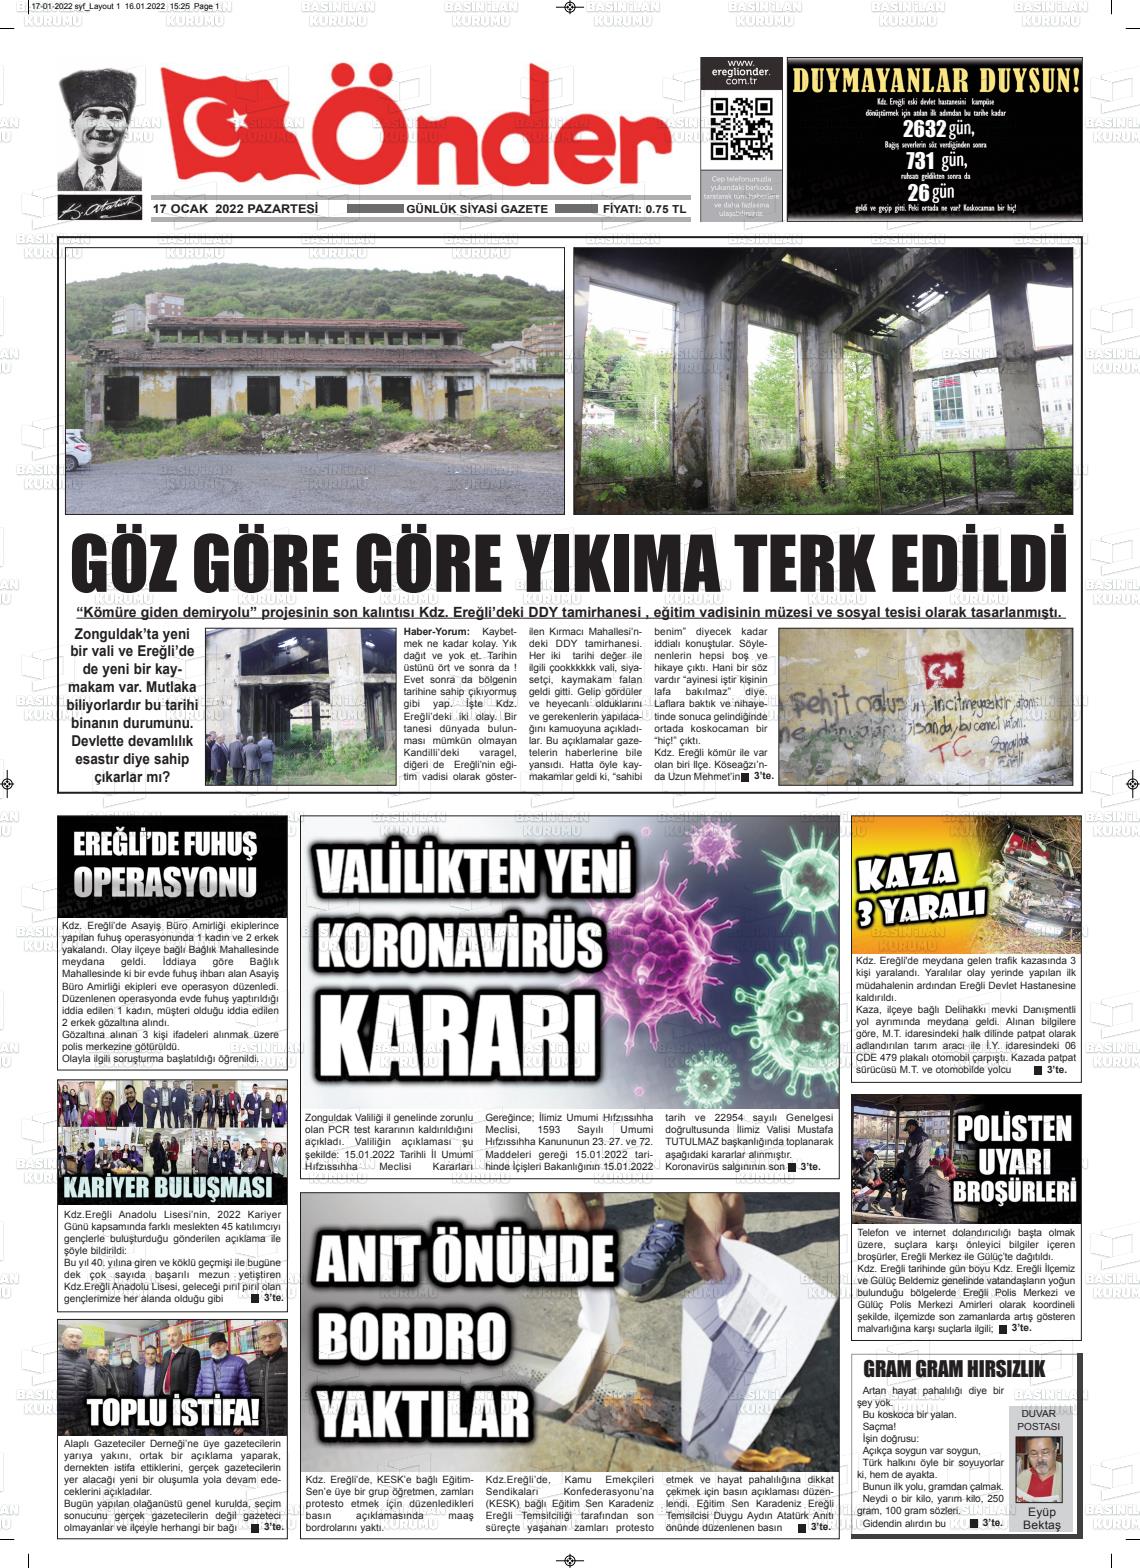 17 Ocak 2022 Zonguldak Önder Gazete Manşeti